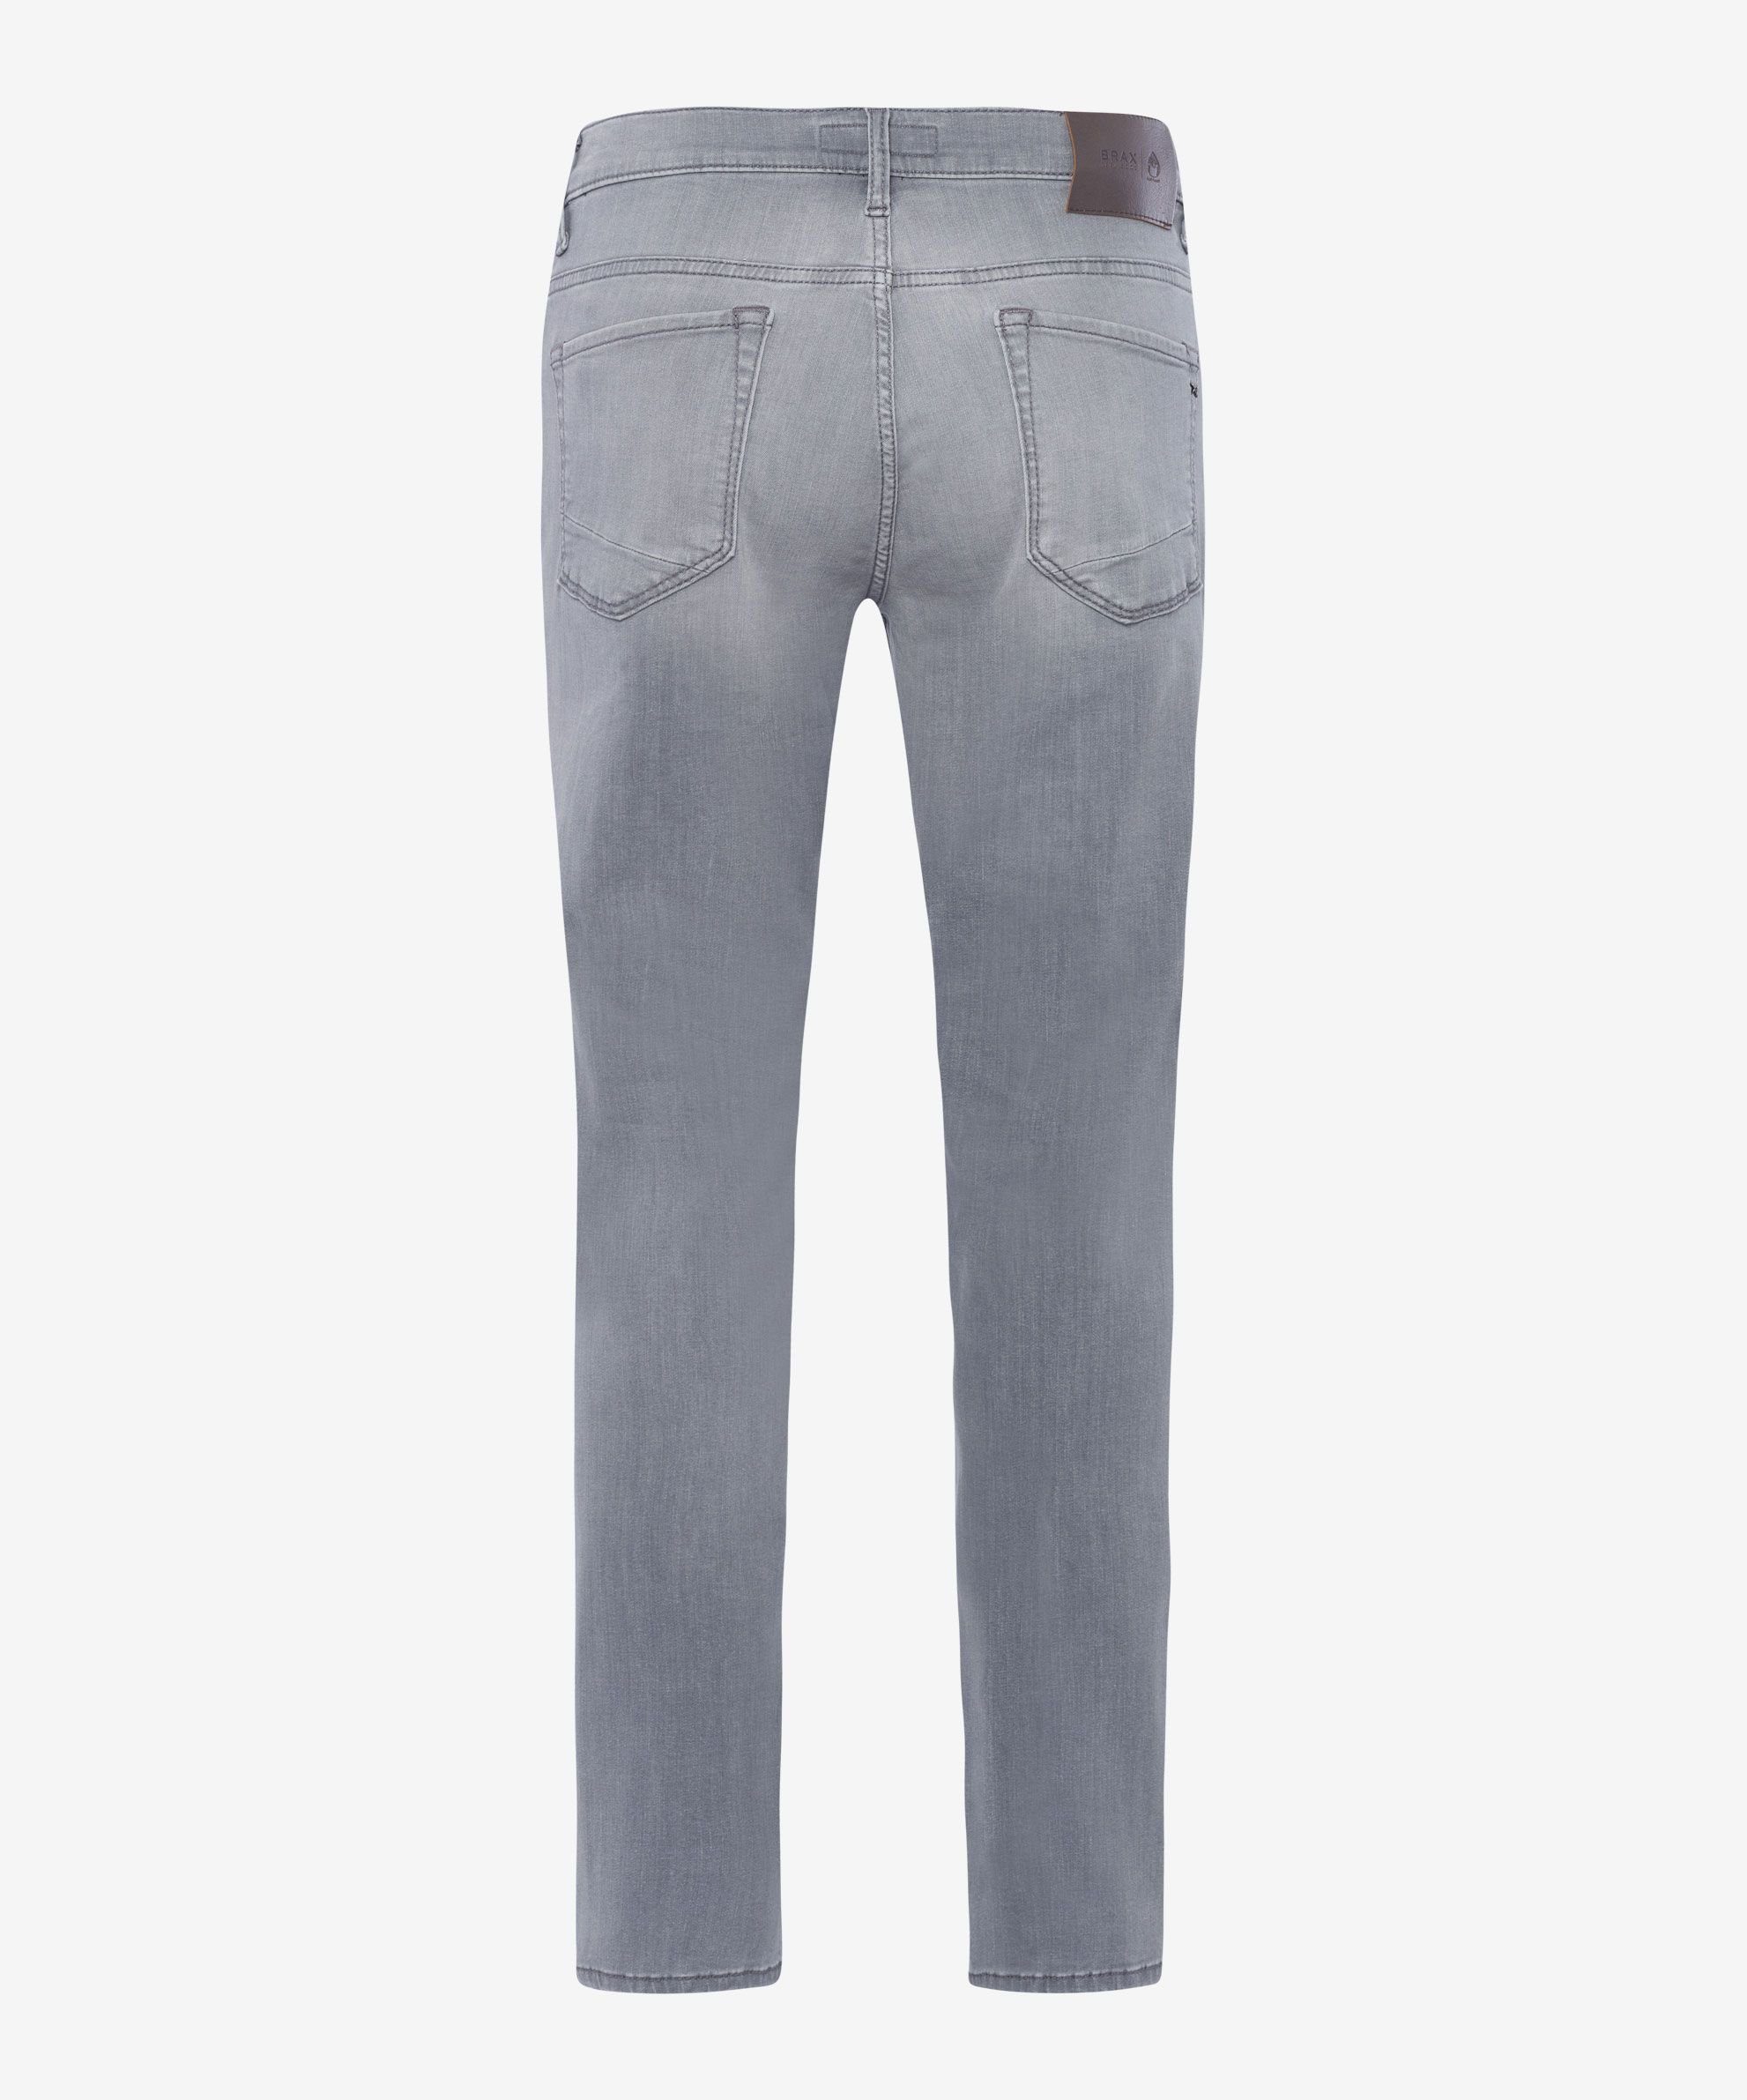 Brax 5-Pocket-Jeans grey used